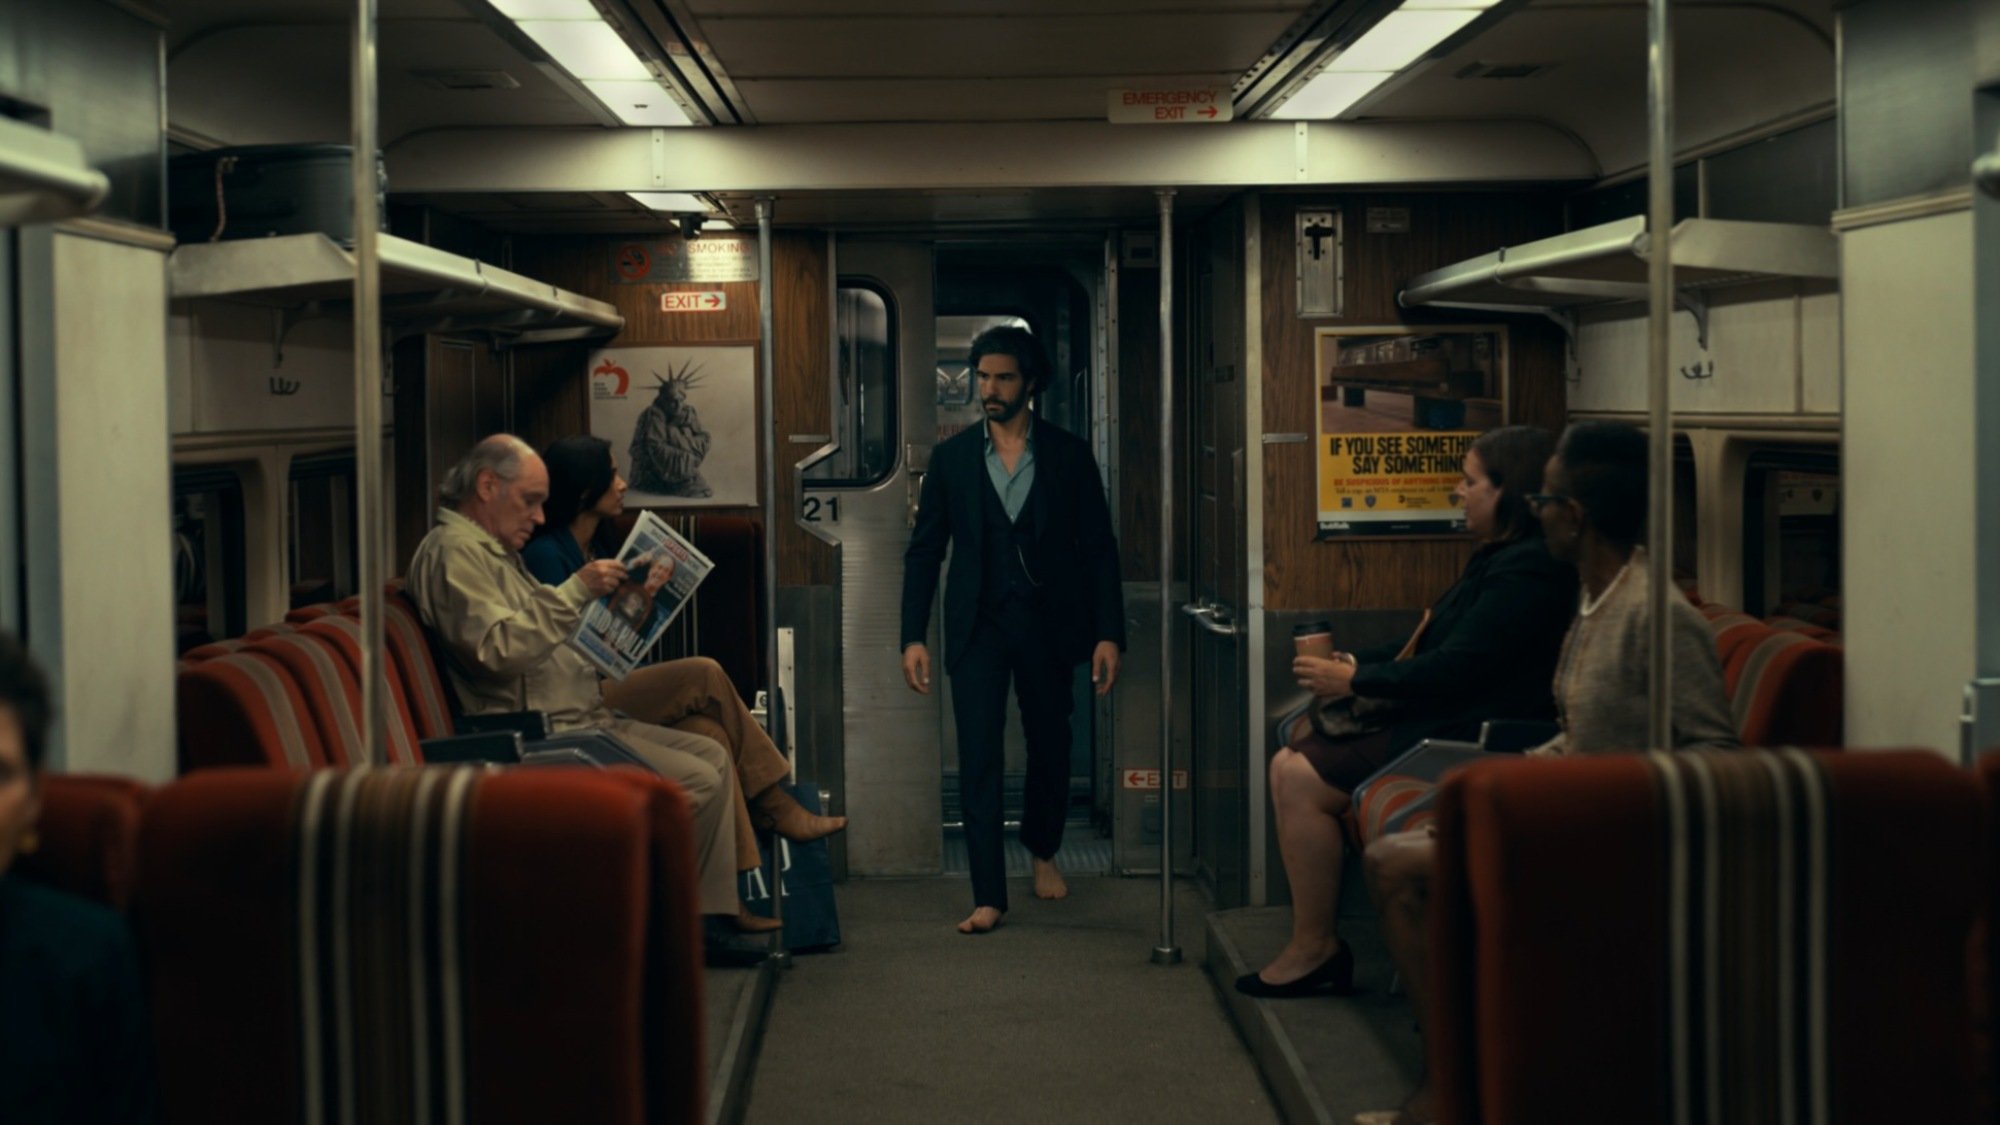 A man stands in a subway train car.